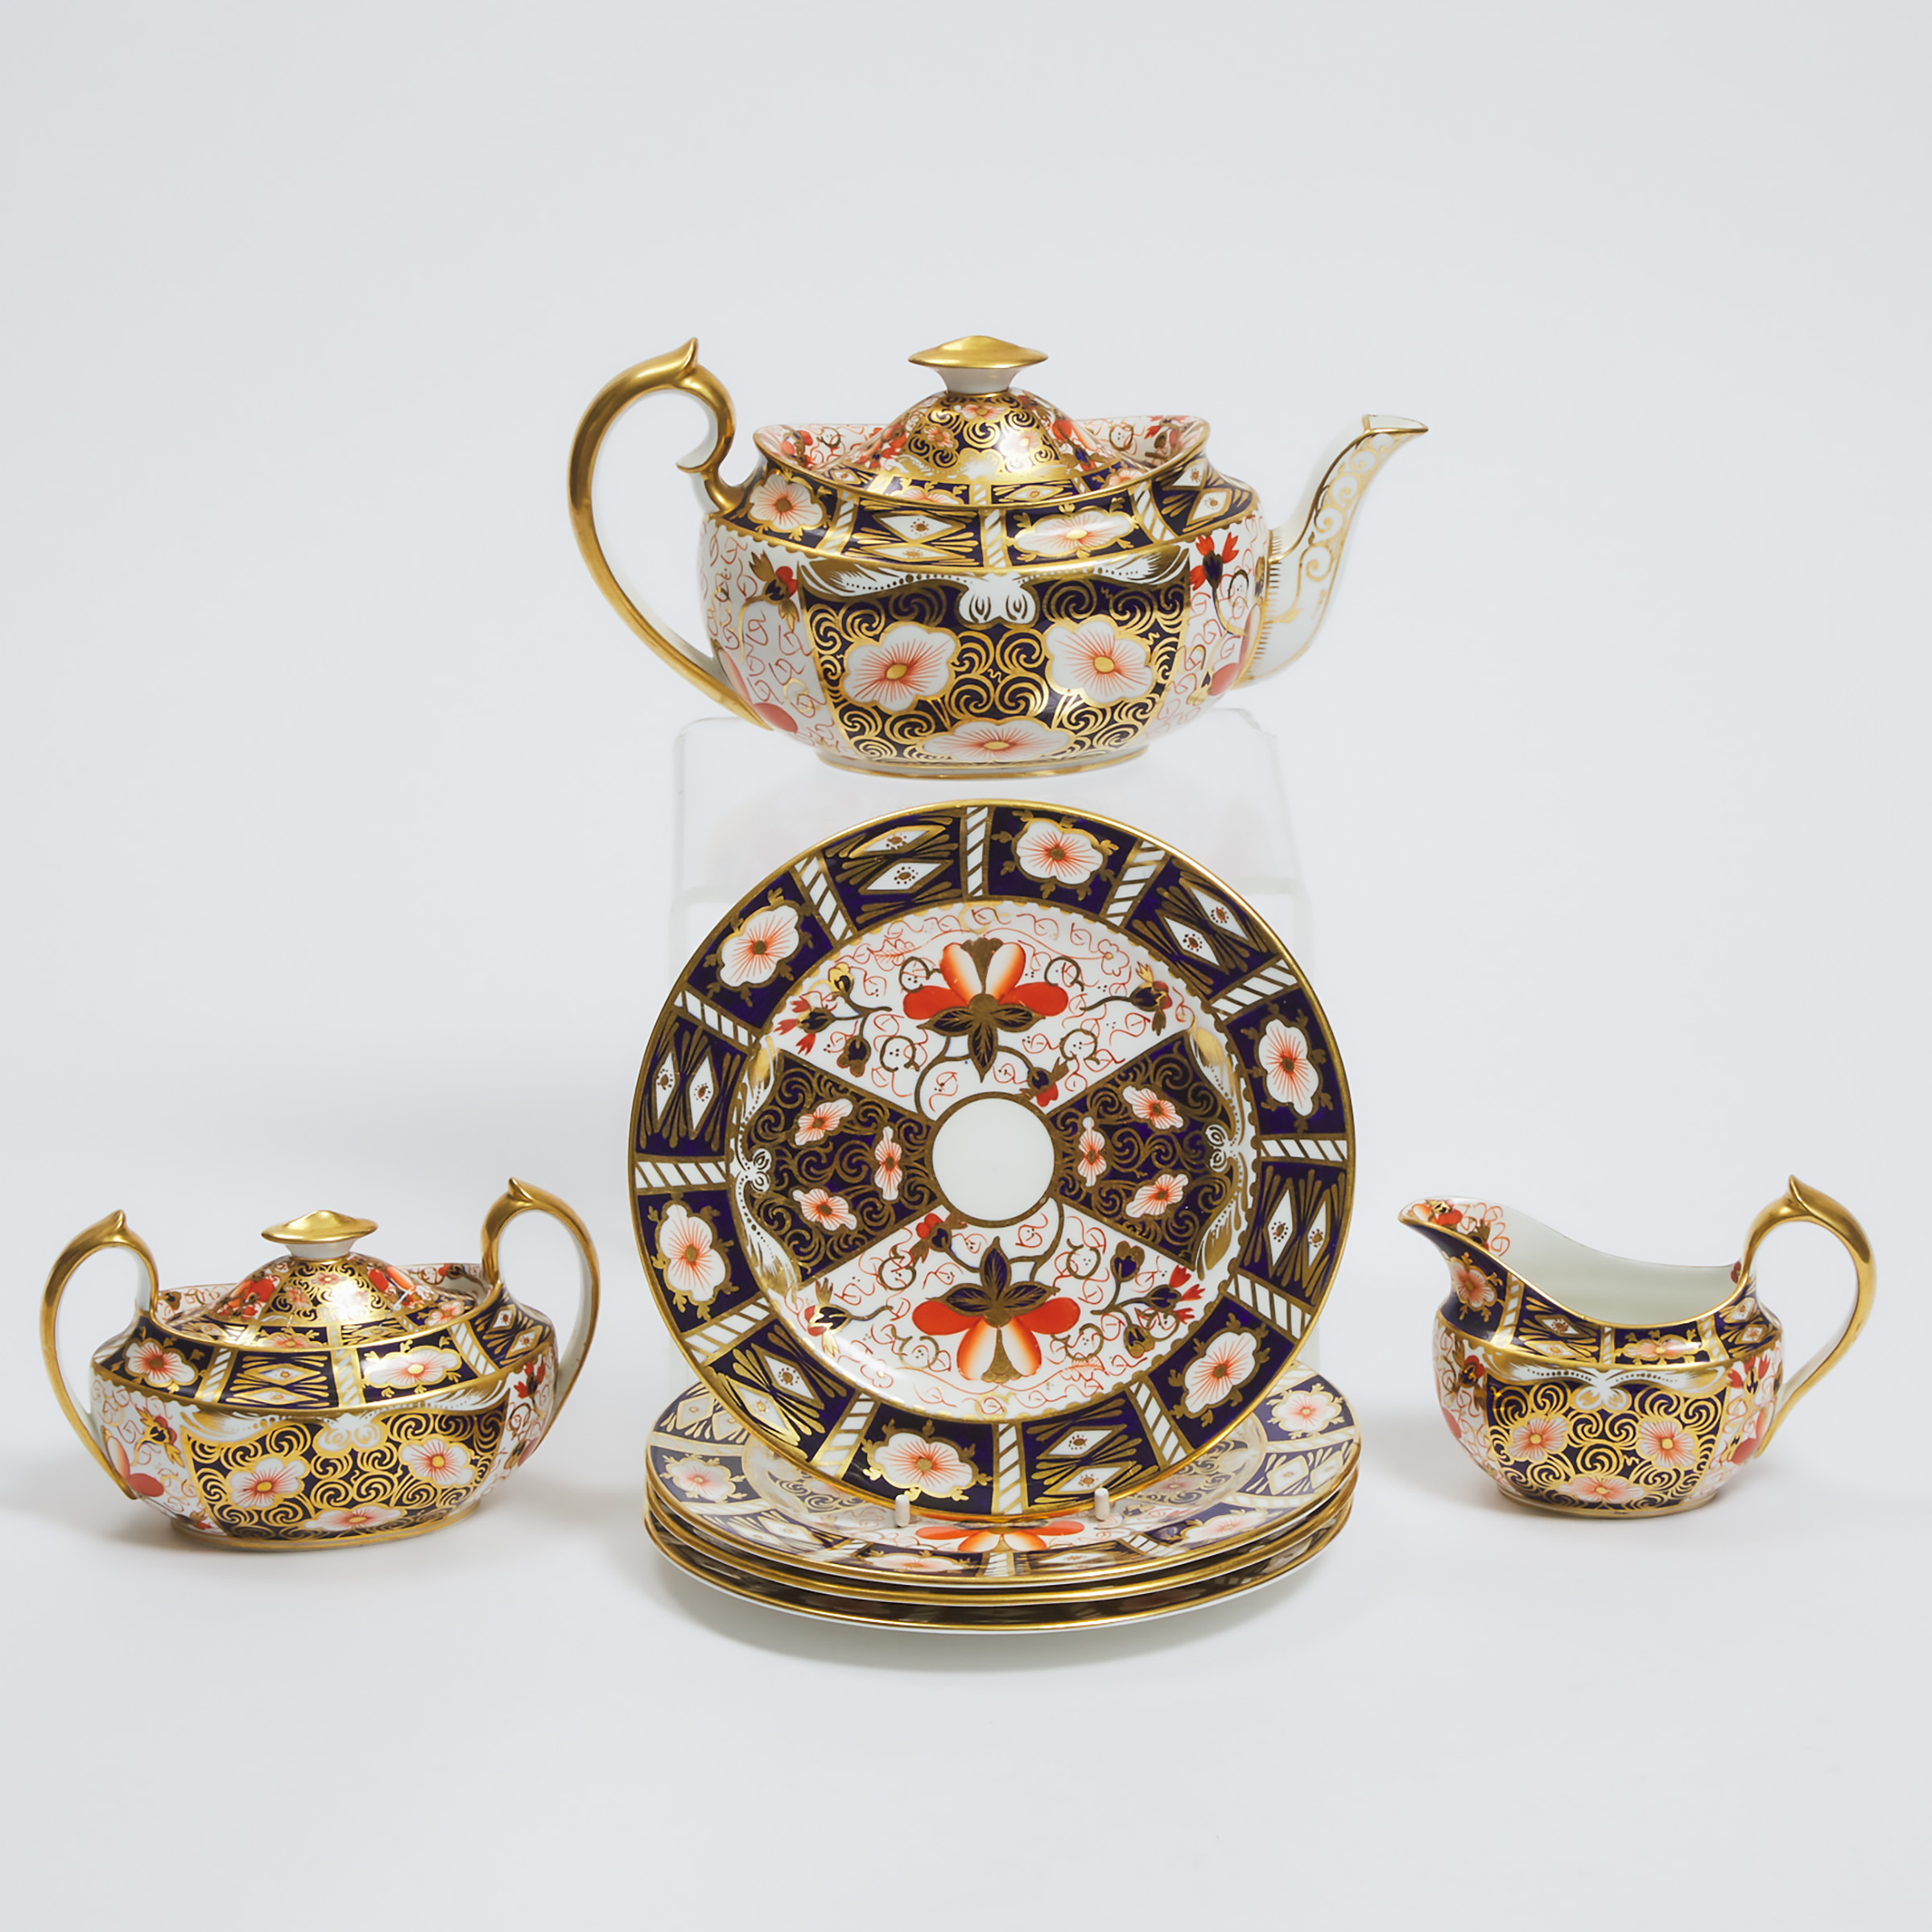 Royal Crown Derby 'Imari' (2451) Pattern Three-Piece Tea Service and Four Plates, 20th century